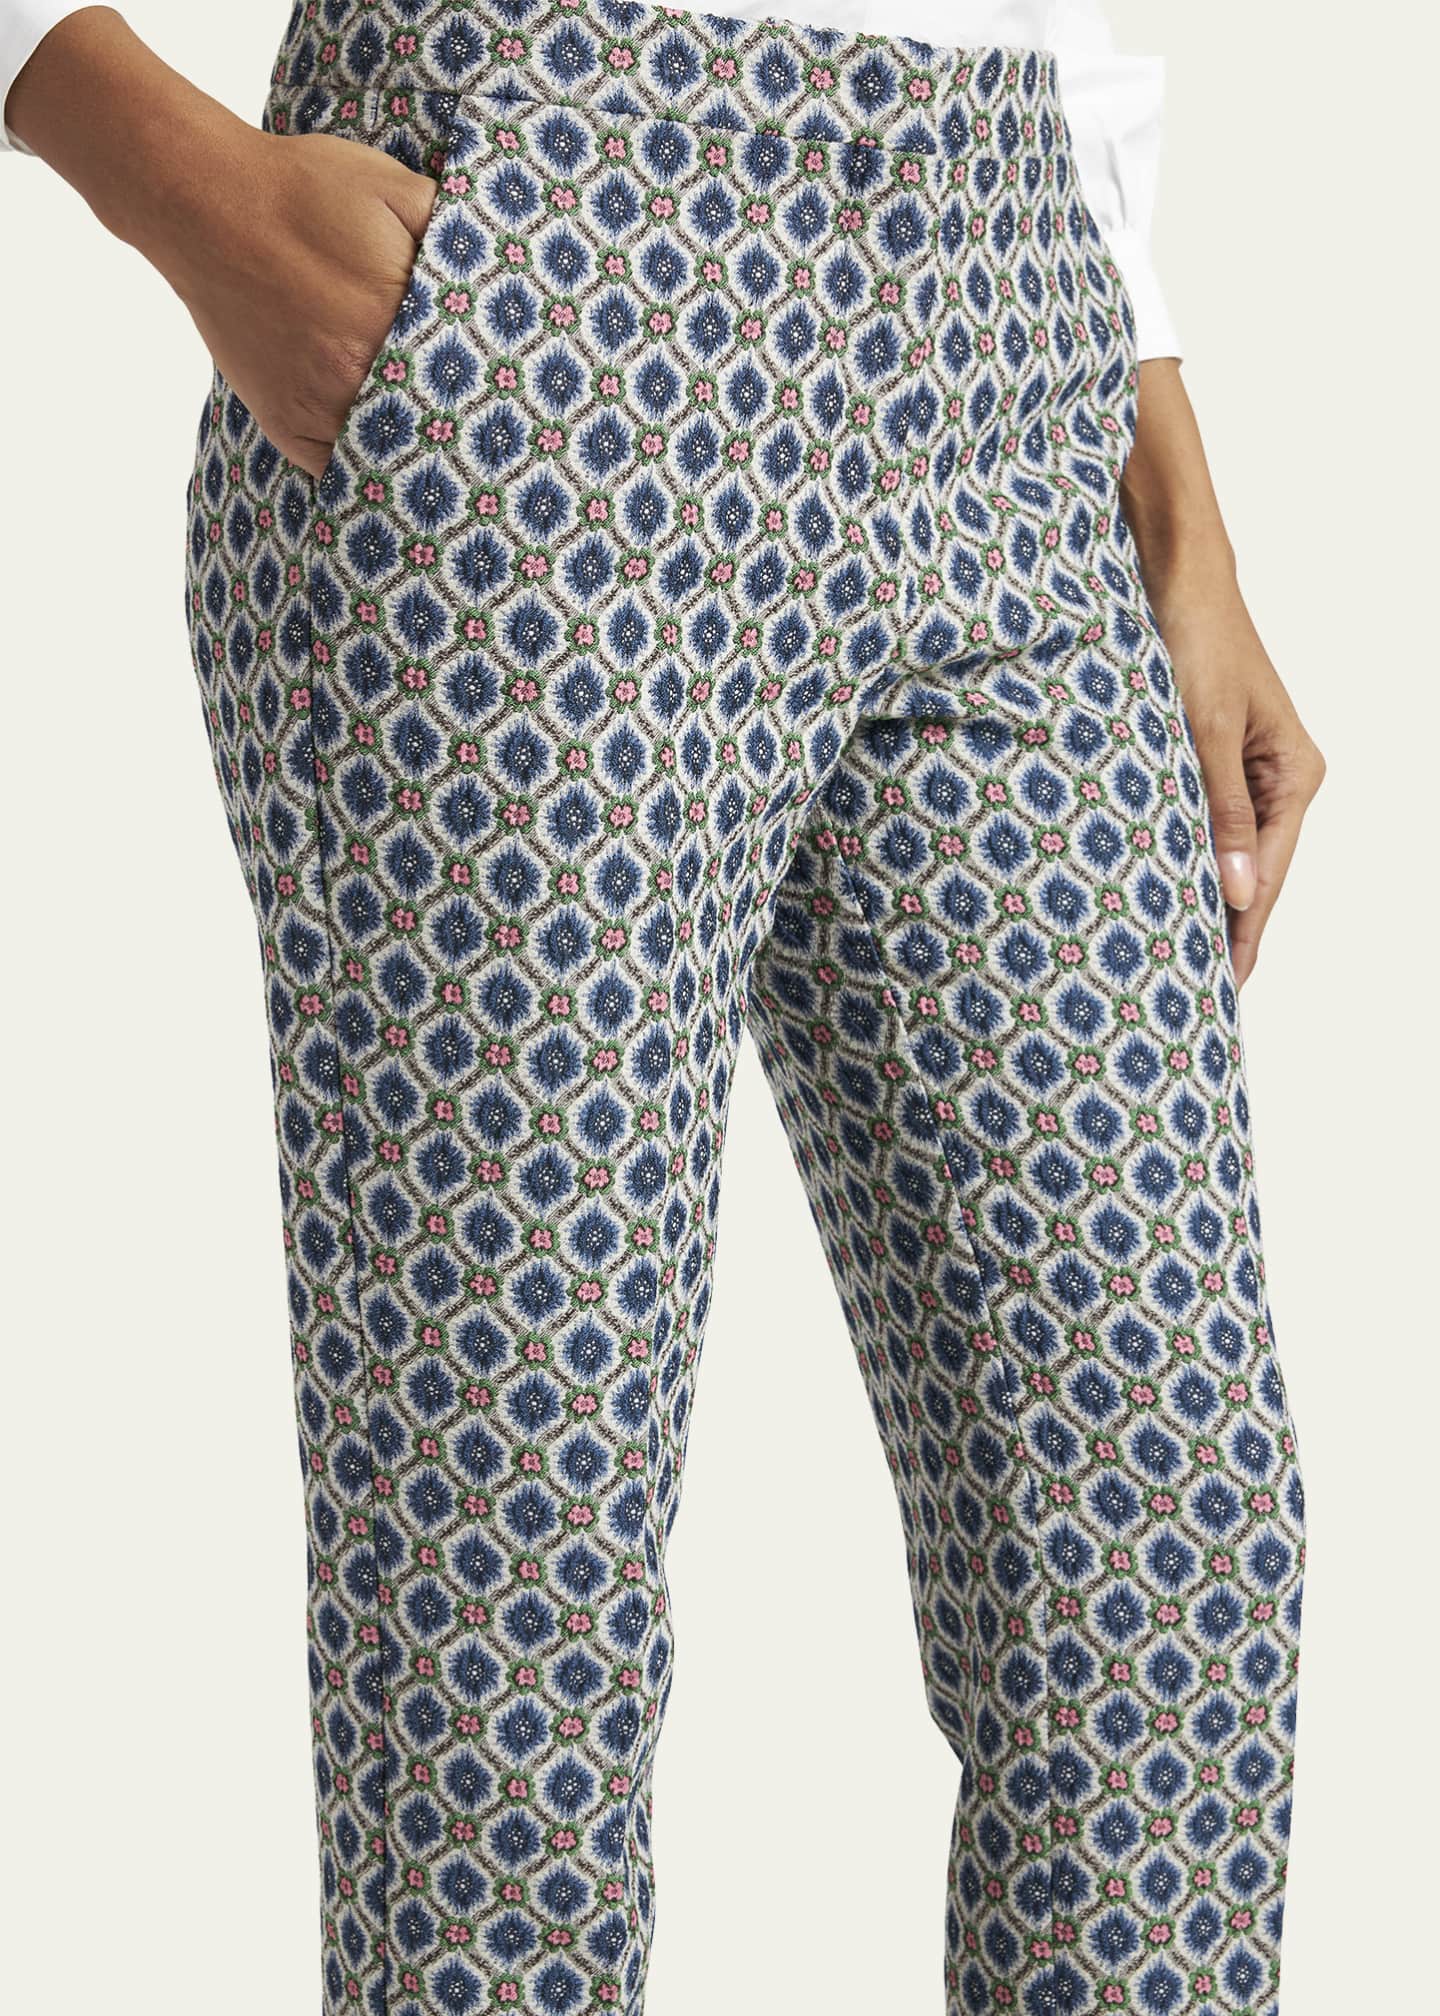 Etro Printed Tile Jacquard Pants - Bergdorf Goodman